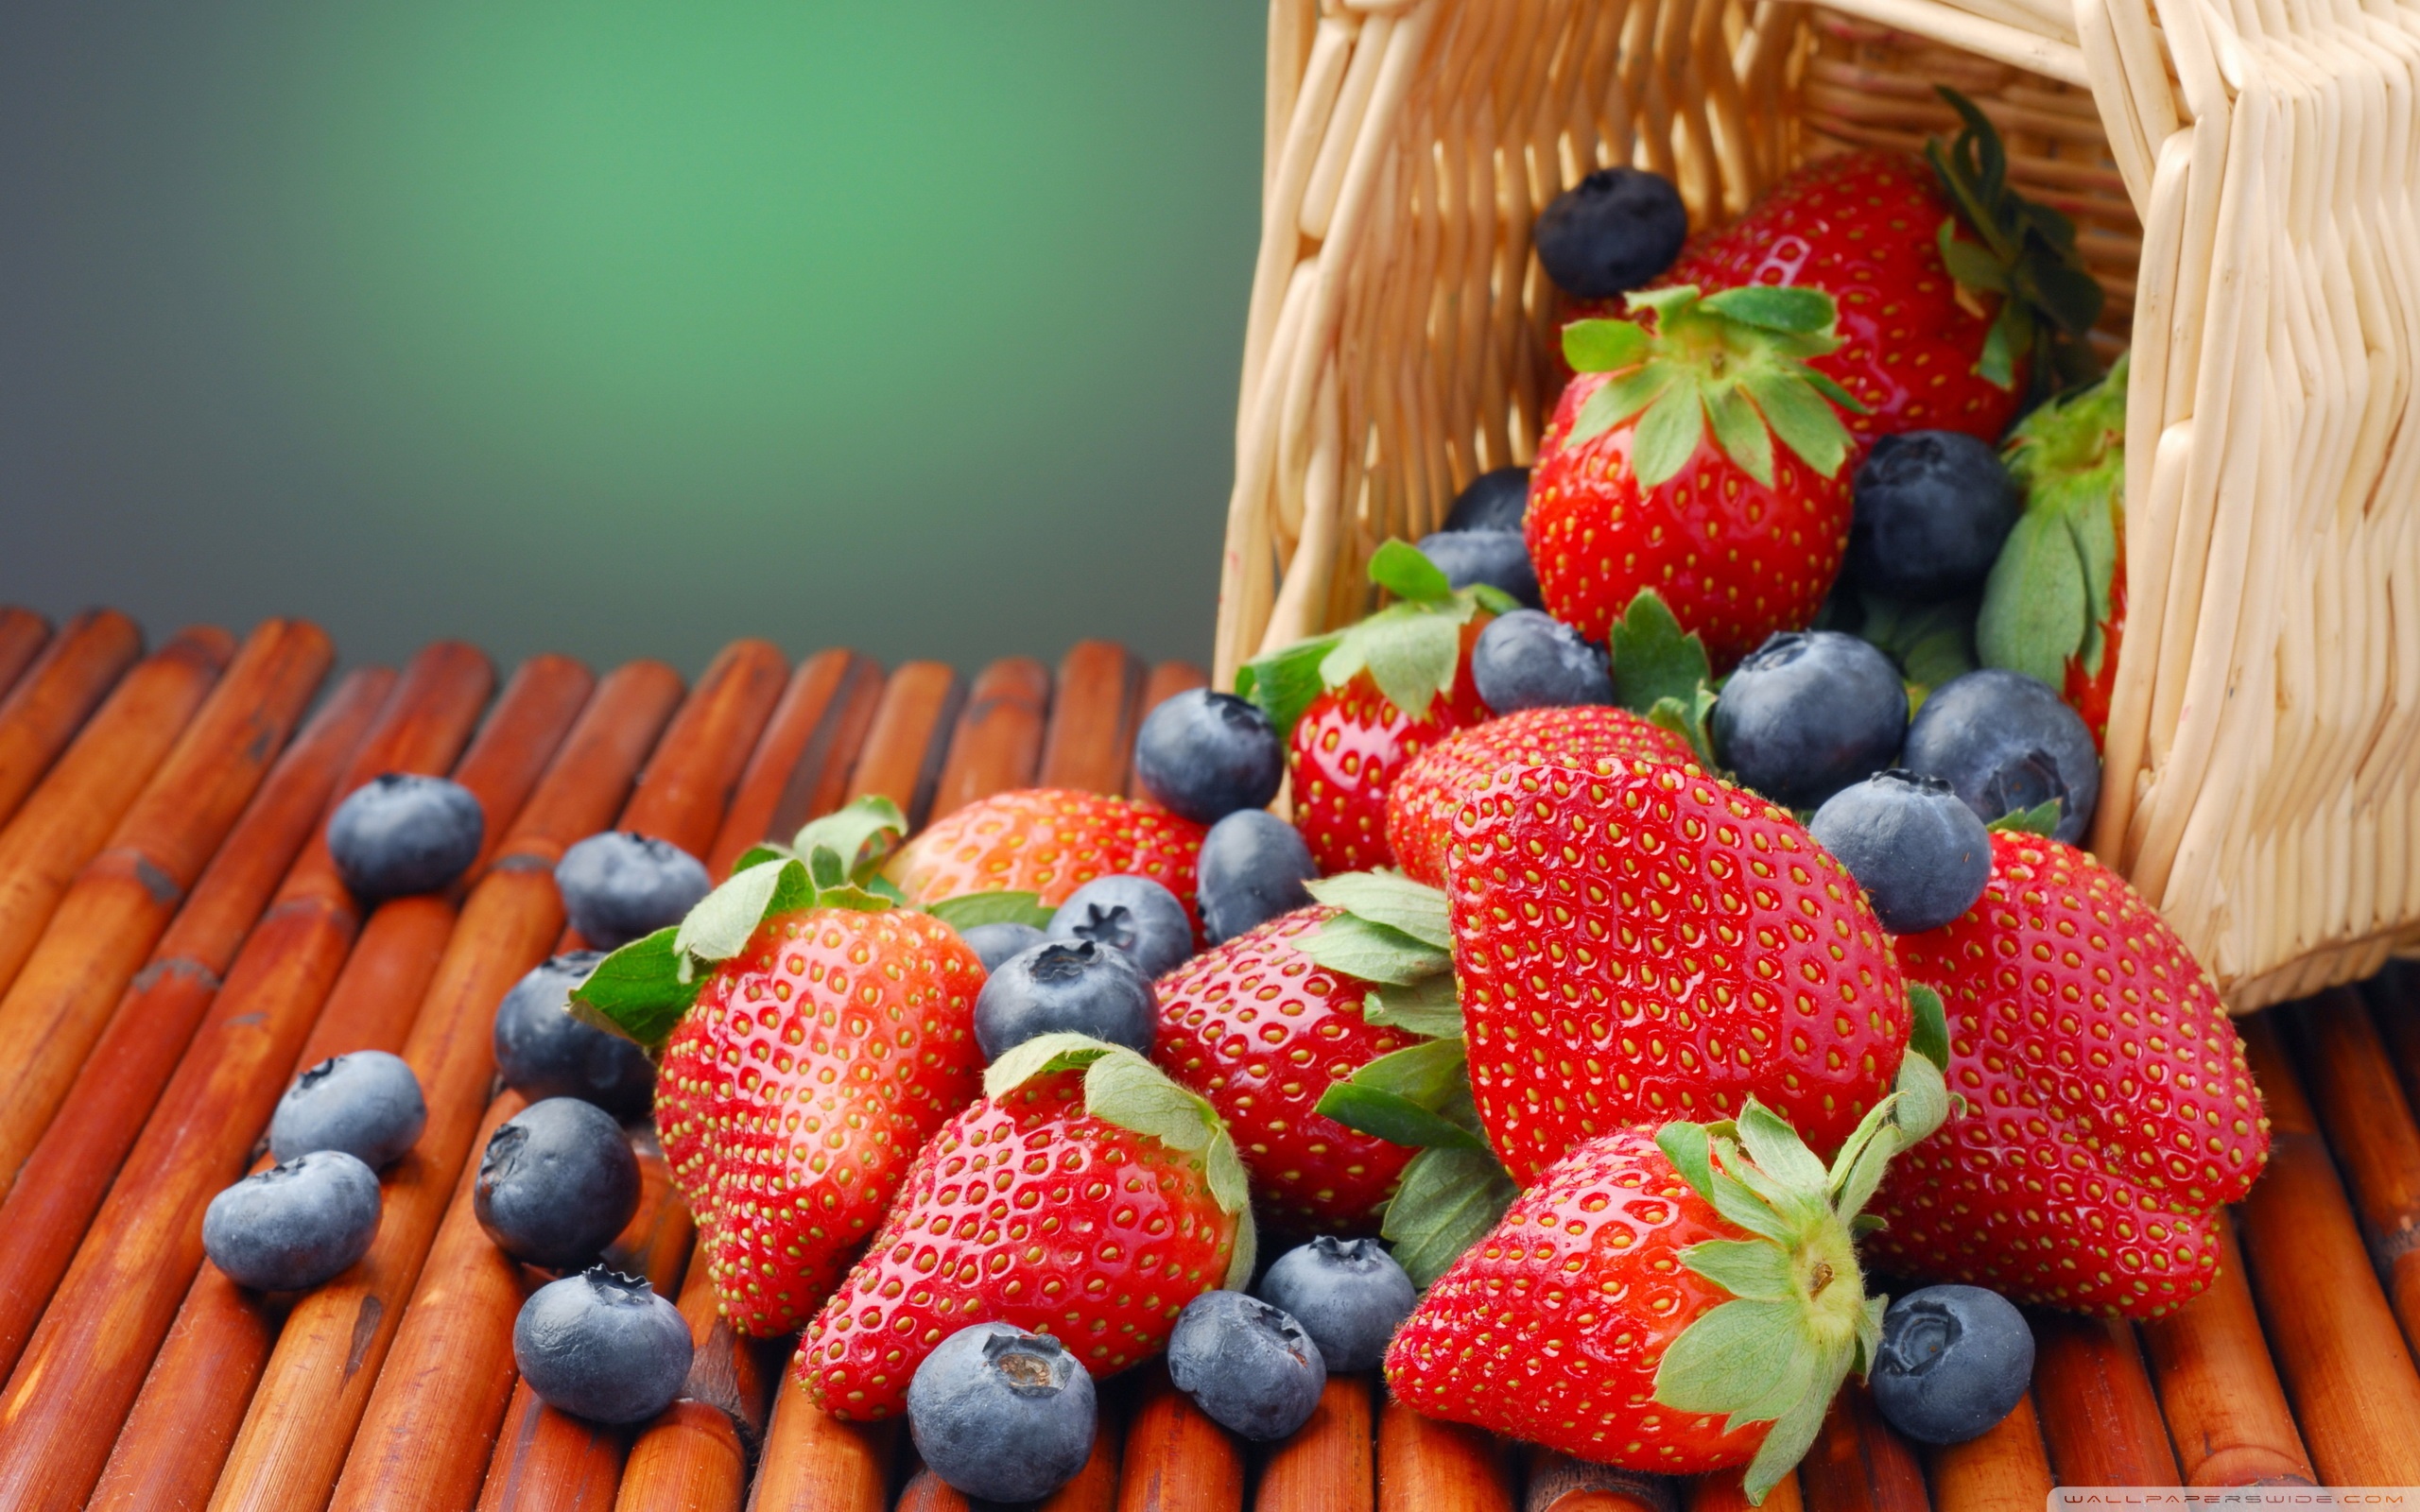 Coloured fresh fruits ultra hd desktop background wallpaper for k uhd tv tablet smartphone